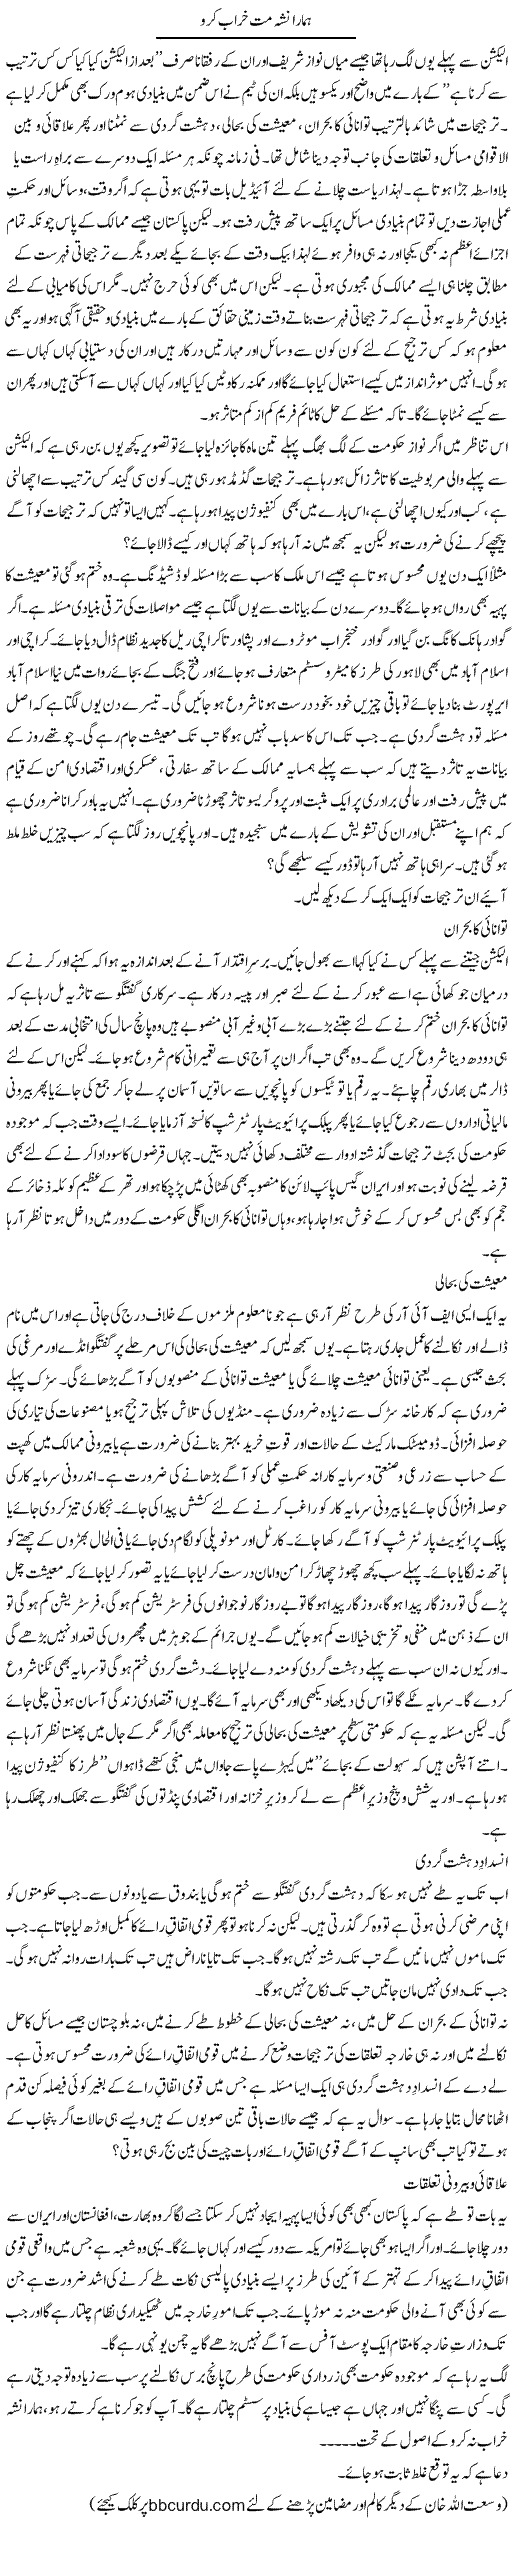 Hamara Nasha Mat Kharab Karo | Wusat Ullah Khan | Daily Urdu Columns